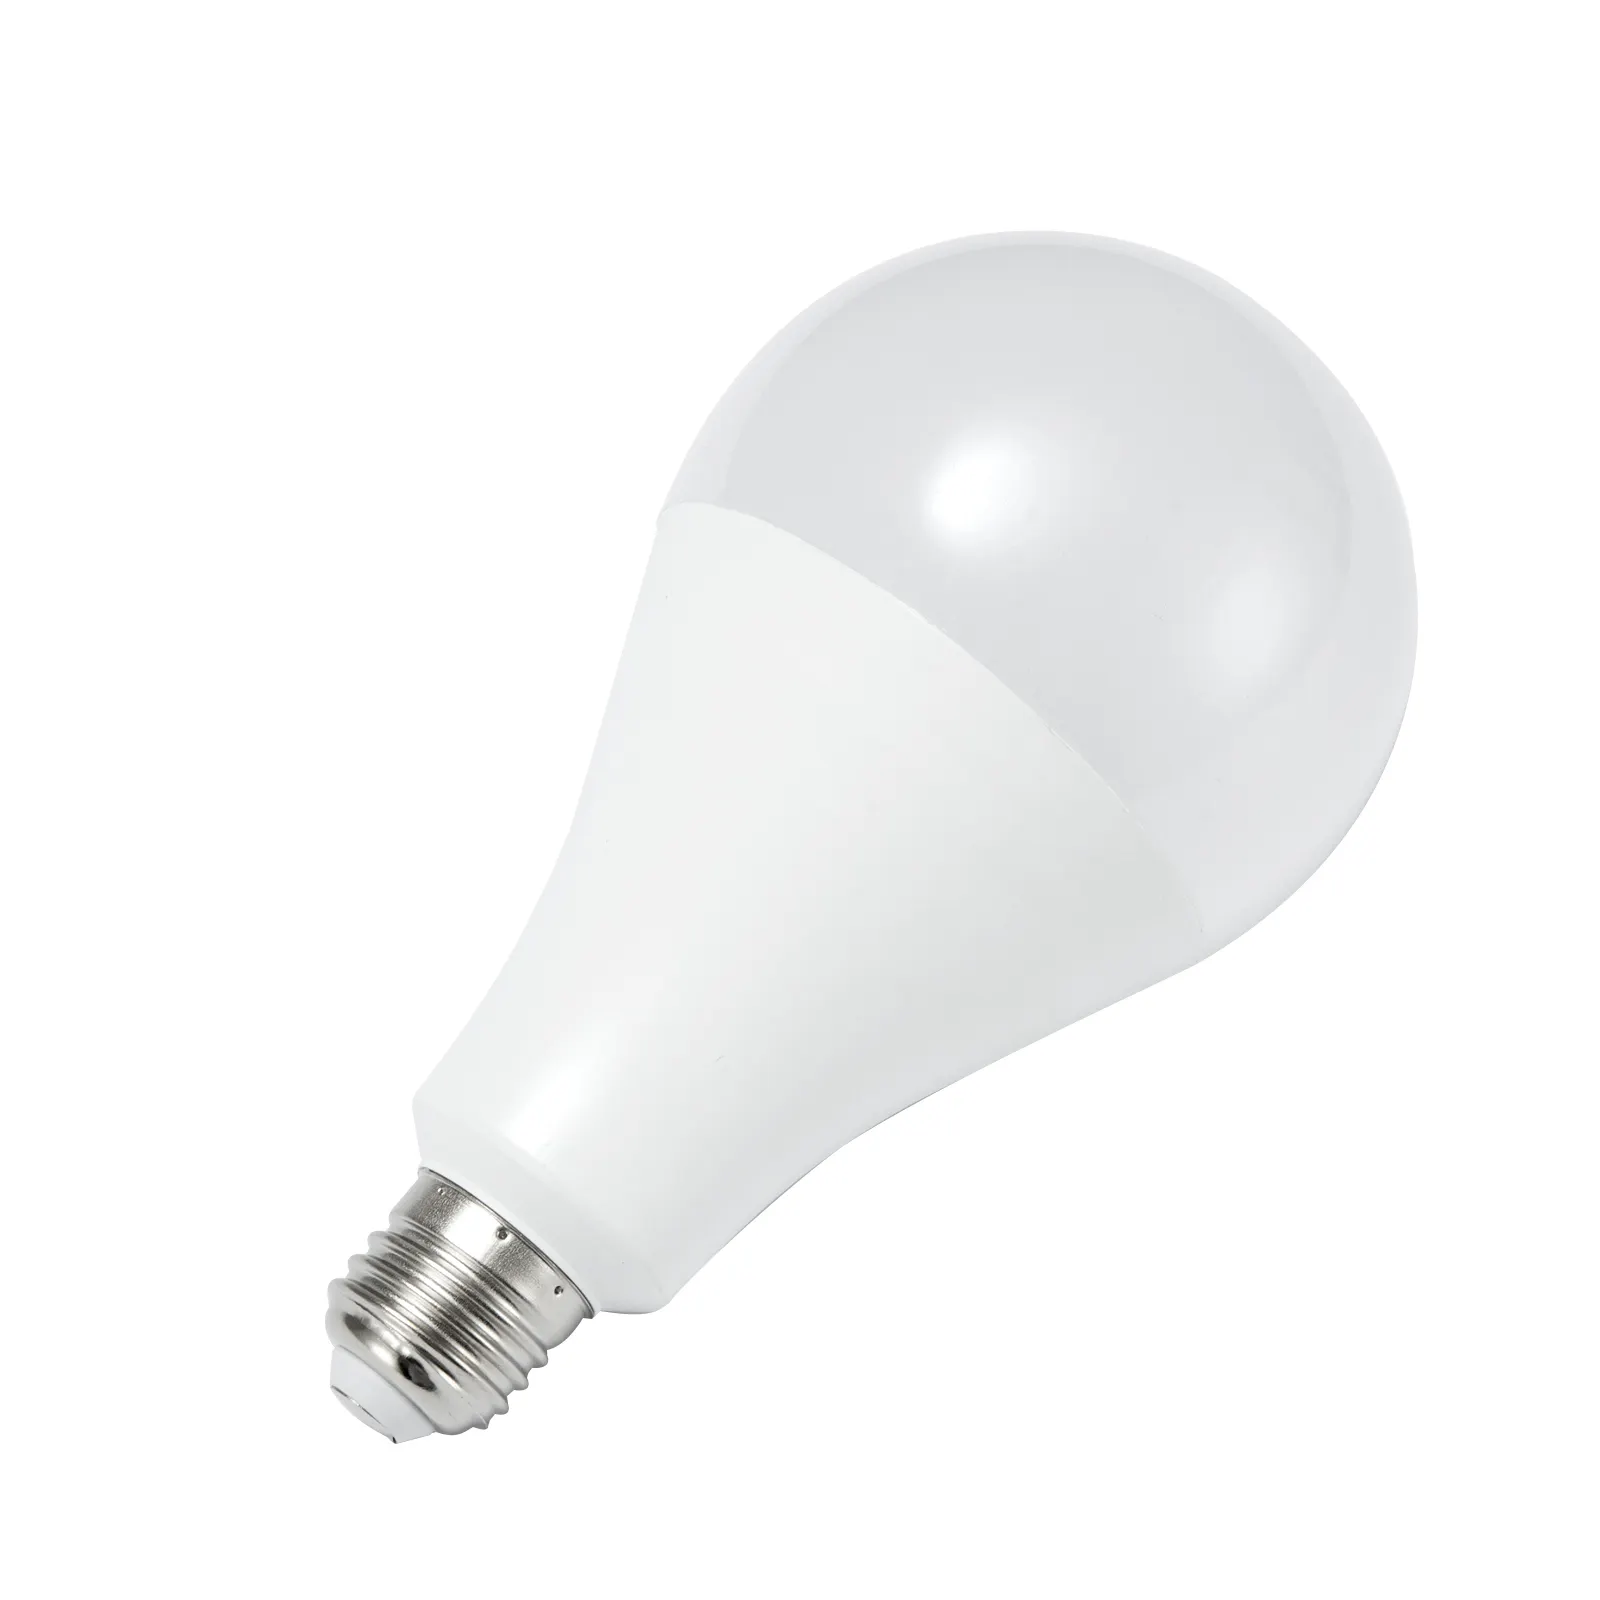 3W 5W 7W 9W 12W 15W 18W Bombillo Led E14 bulb led E27 light led bulbs/light bulbs/led light bulb,led bulb,Led Bulb Light bulb